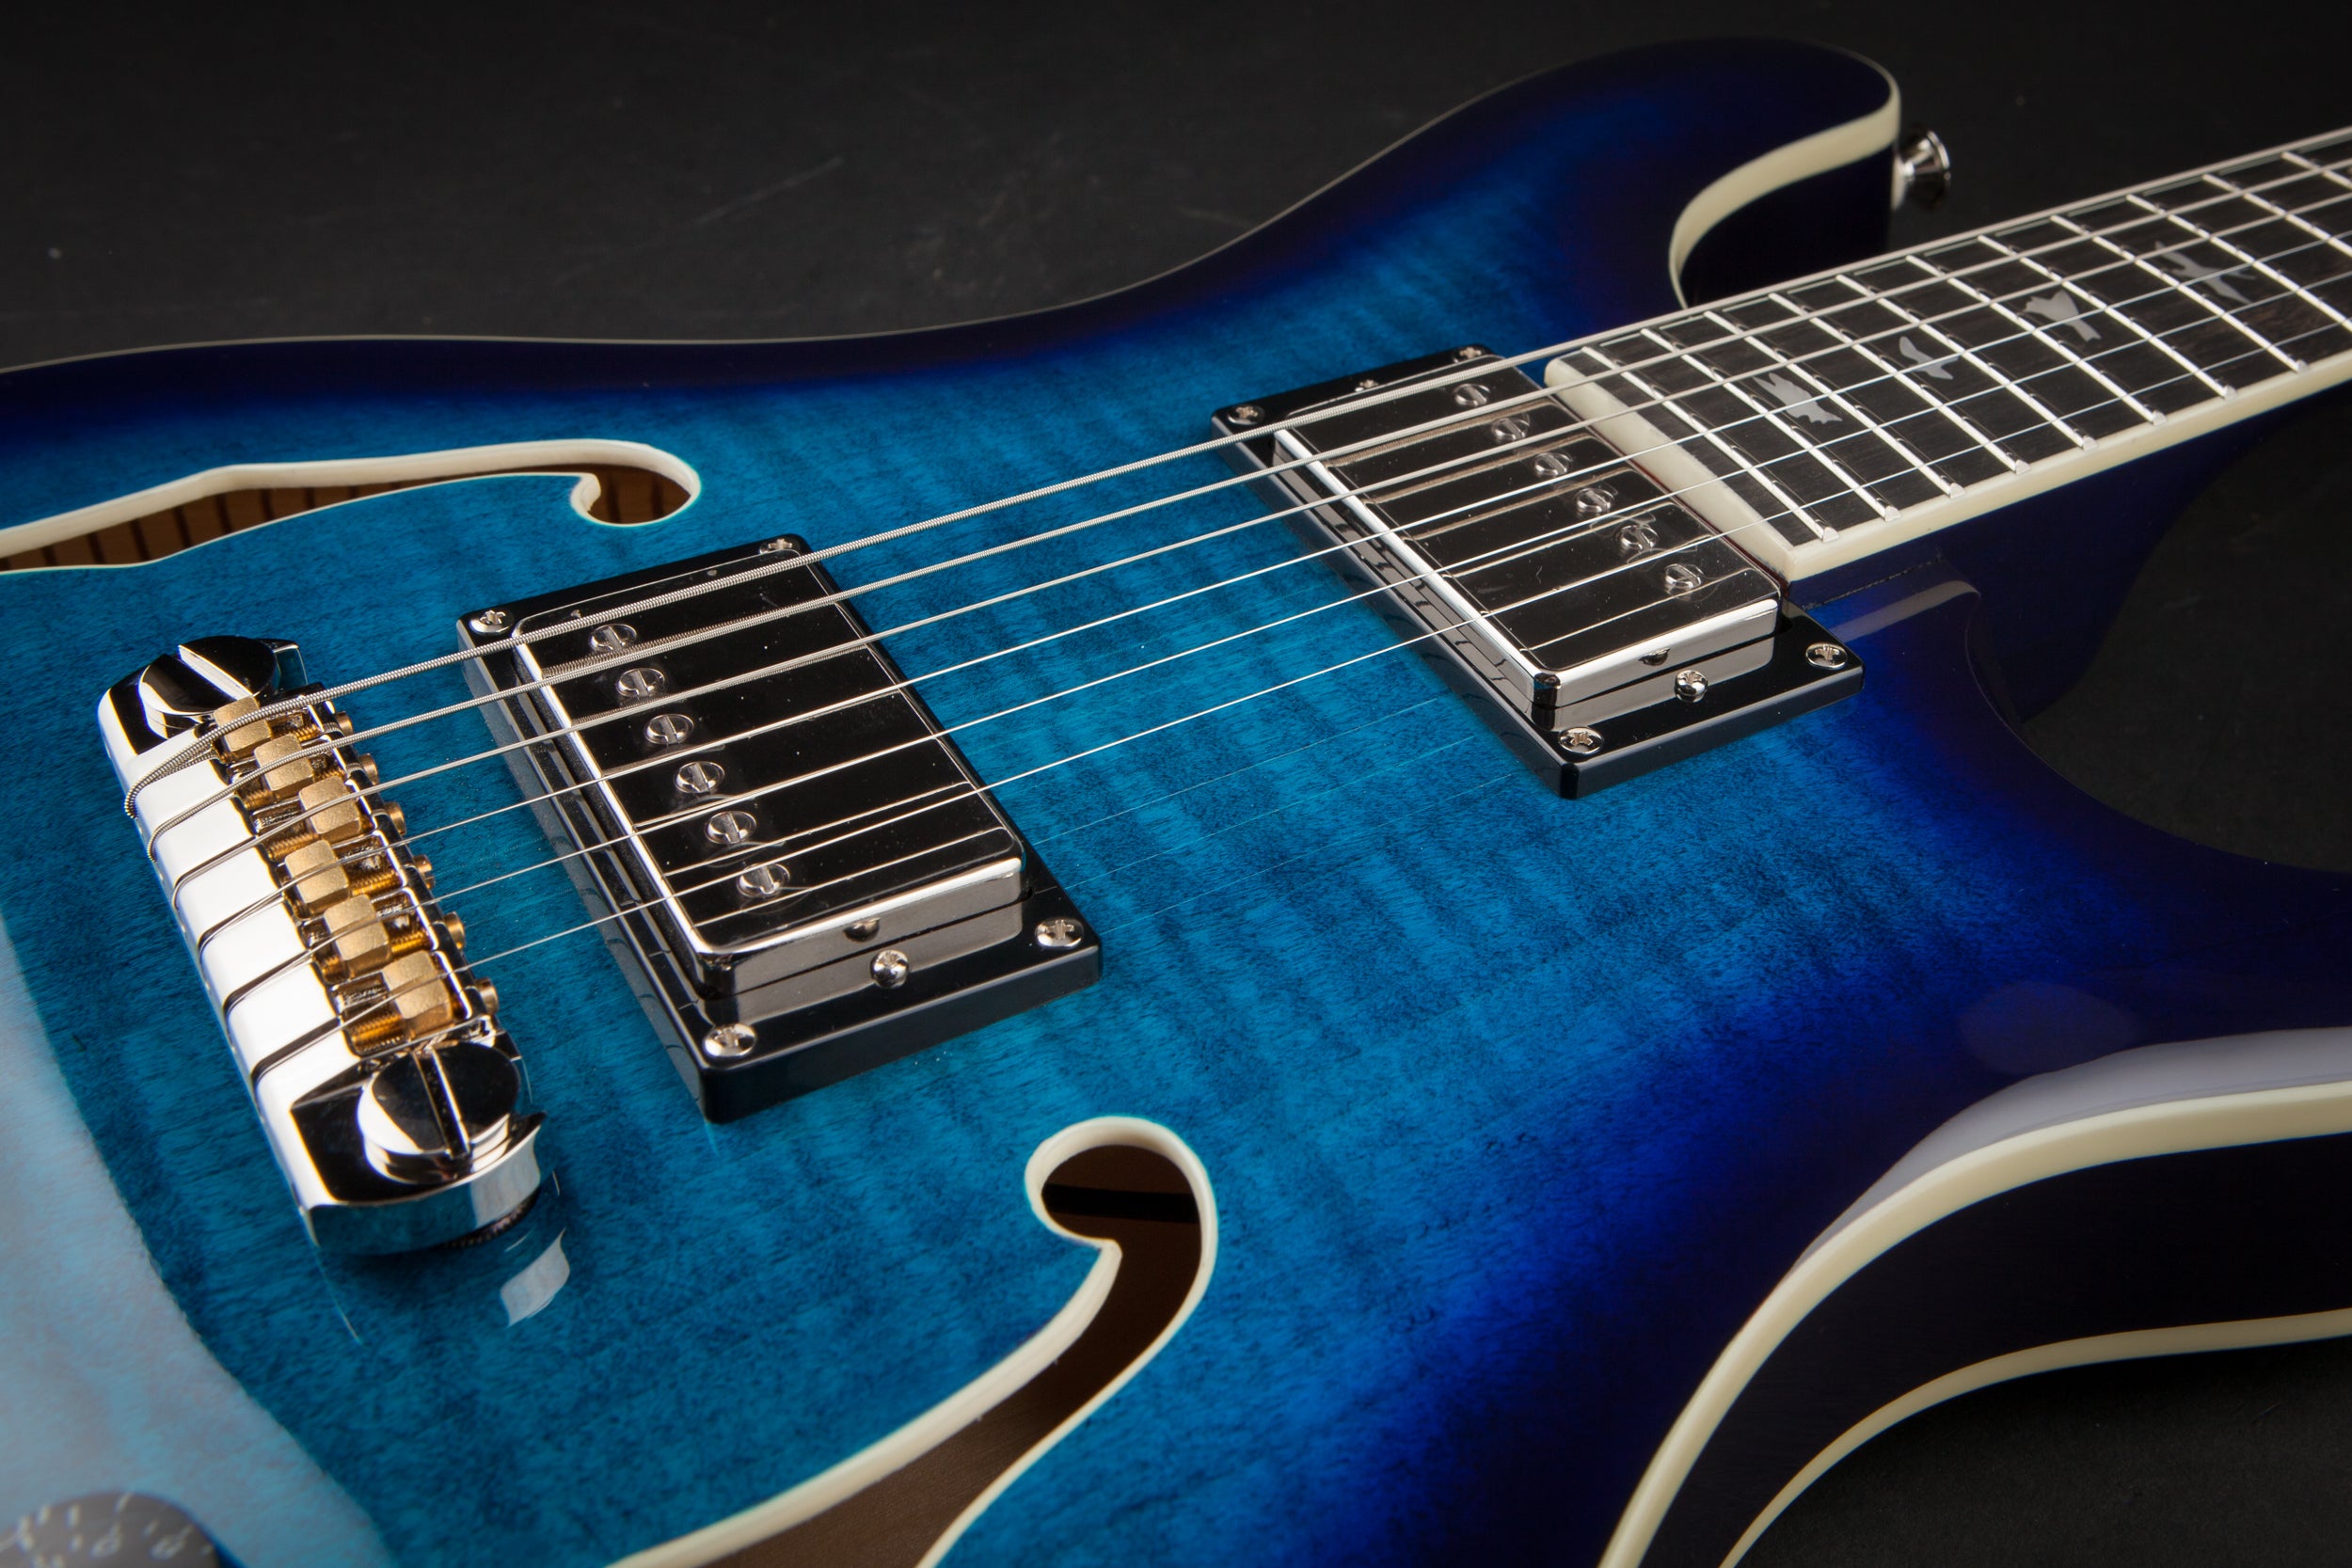 PRS Guitars: SE Hollowbody II Faded Blue Burst #F18776